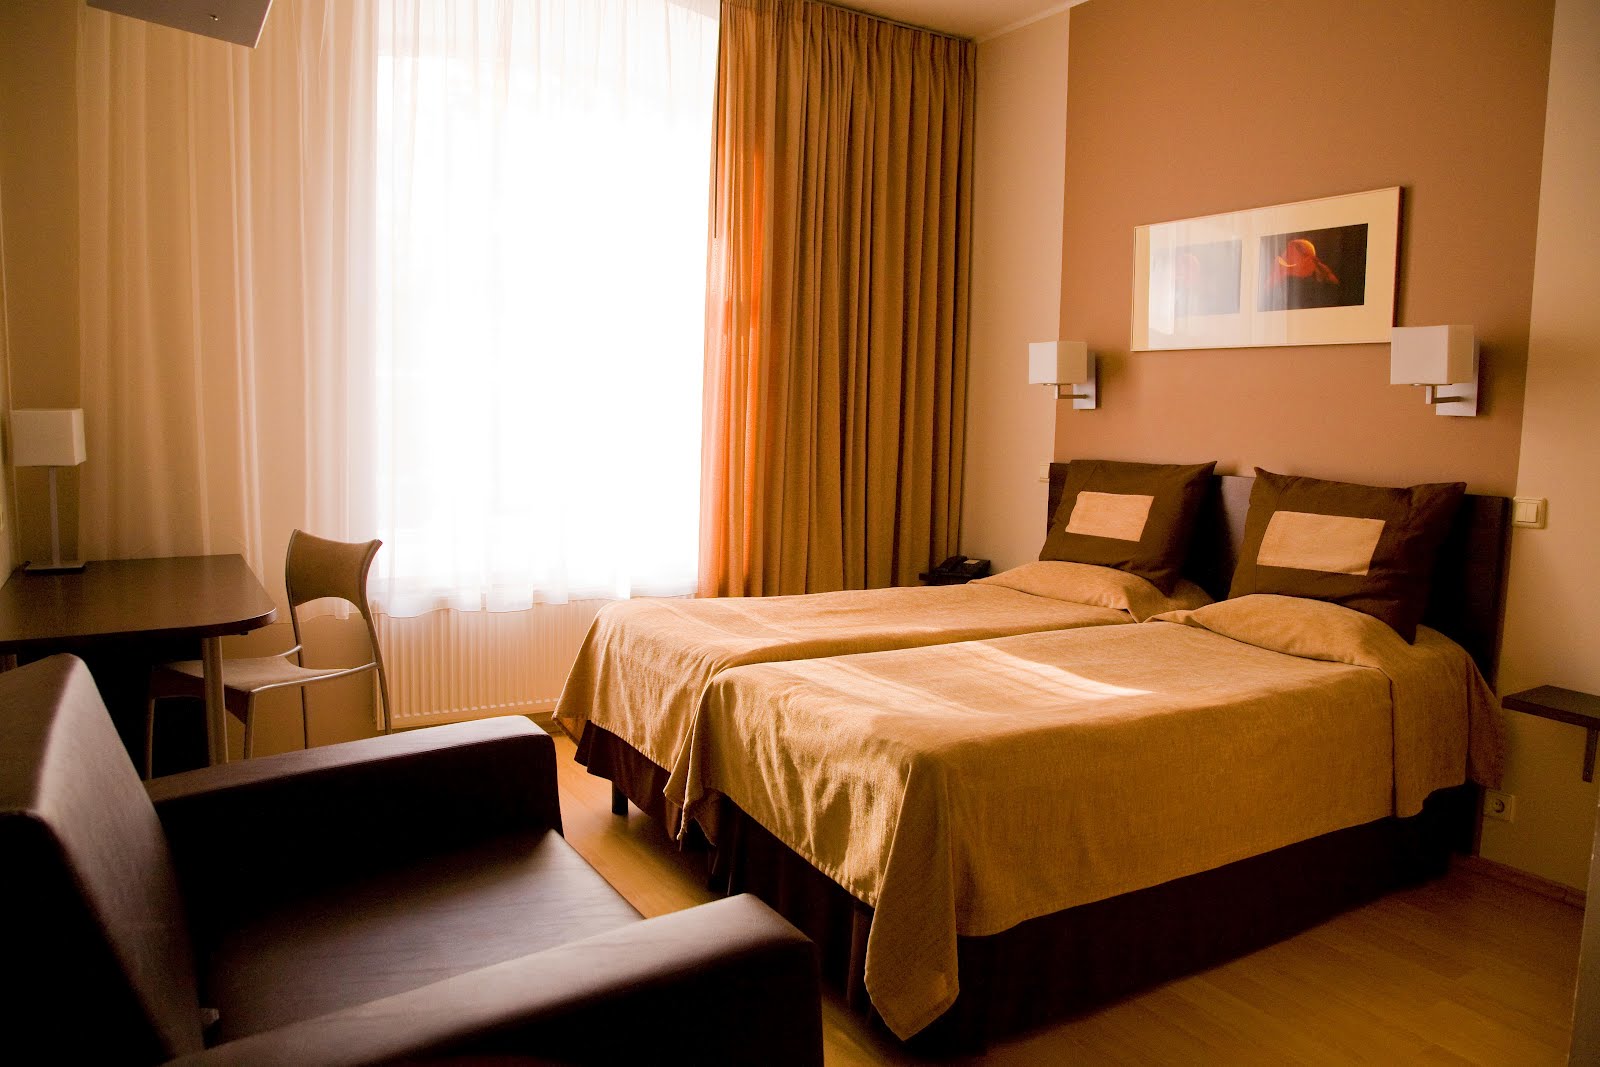 cheap hotel bedroom furniture set